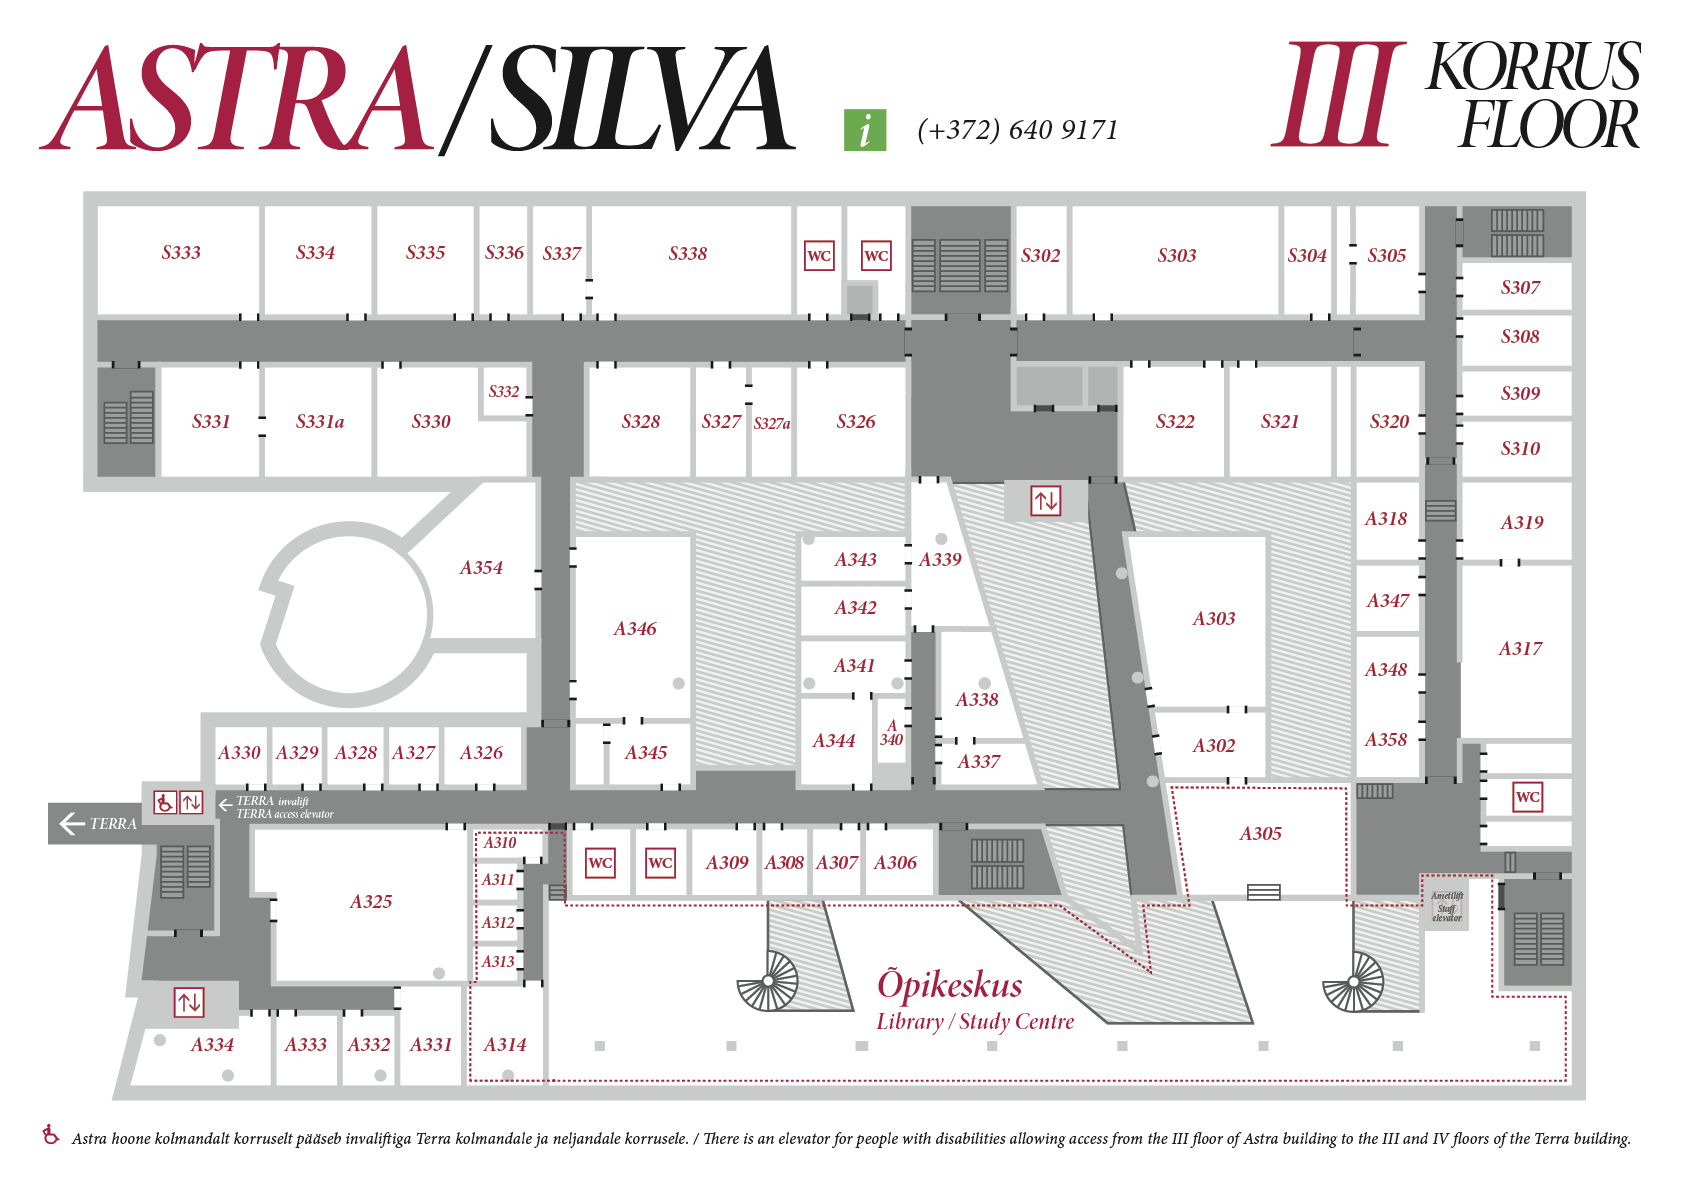 Astra-Silva 3 korrus.jpg